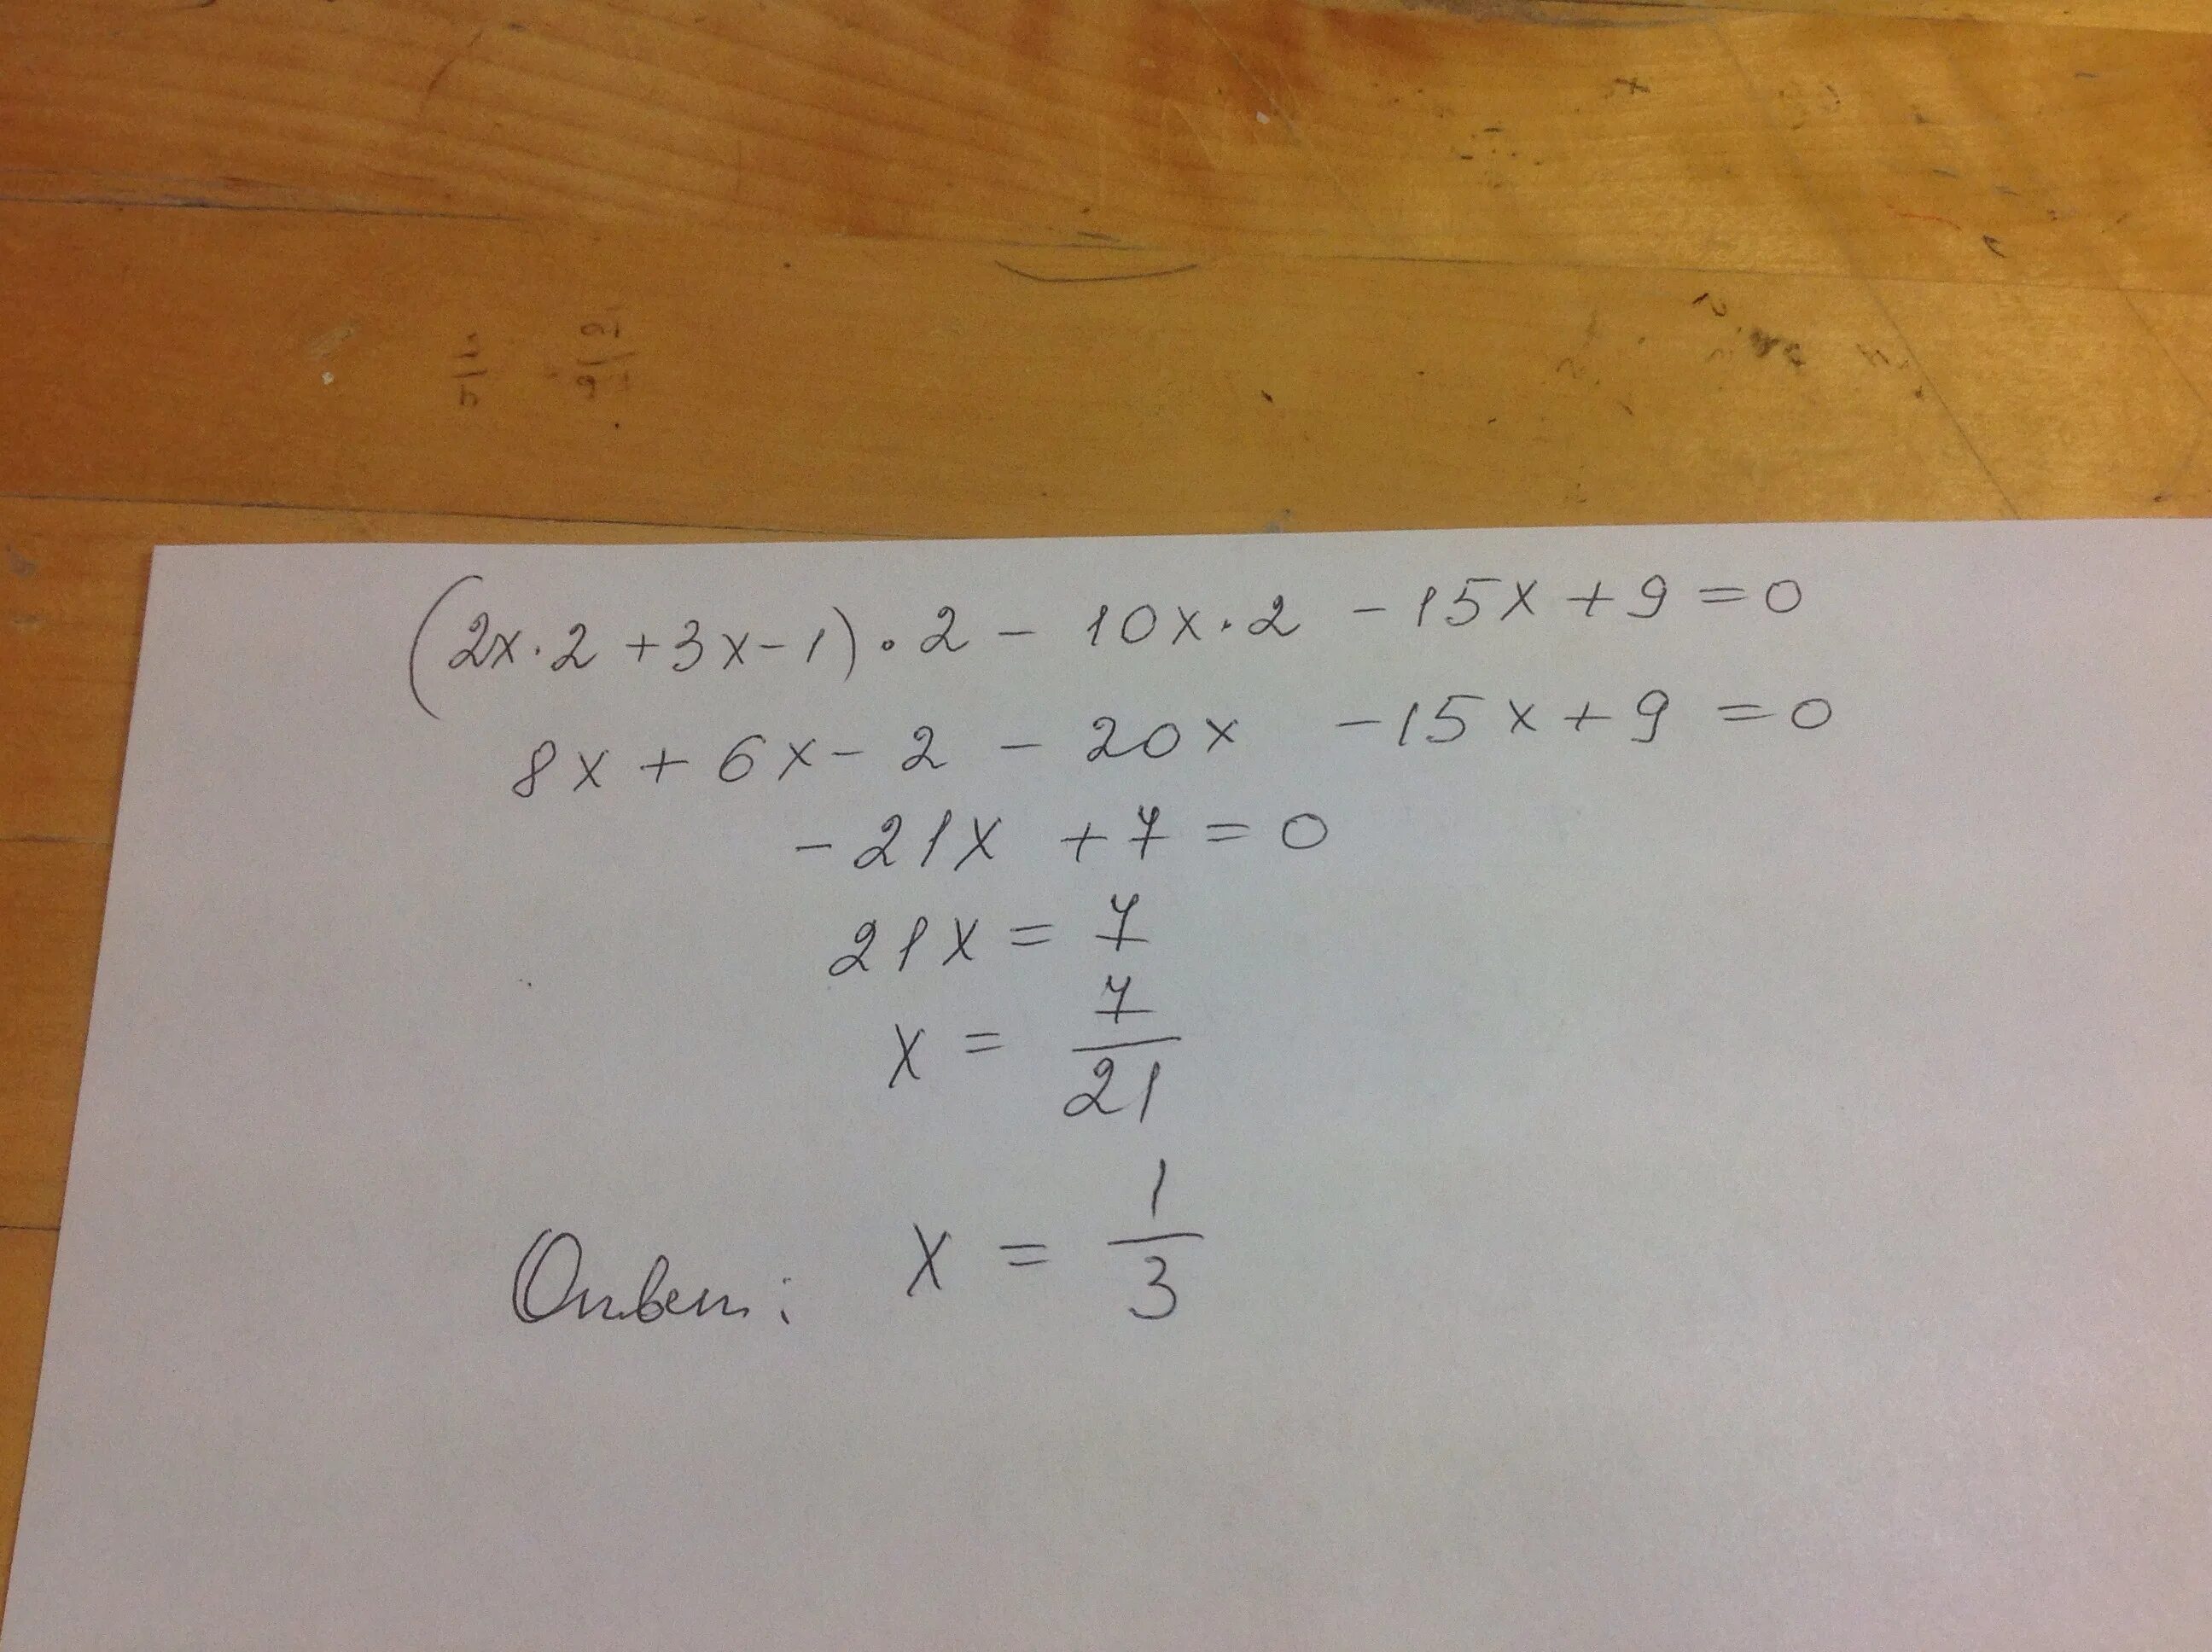 X2 10x 25 x 2. X3-2x2-2x+1. 10x 15 уравнение решении. 1/2x2-10. (X - 15) + (3x - 7) = 2(x−15)+(3x−7)=2.